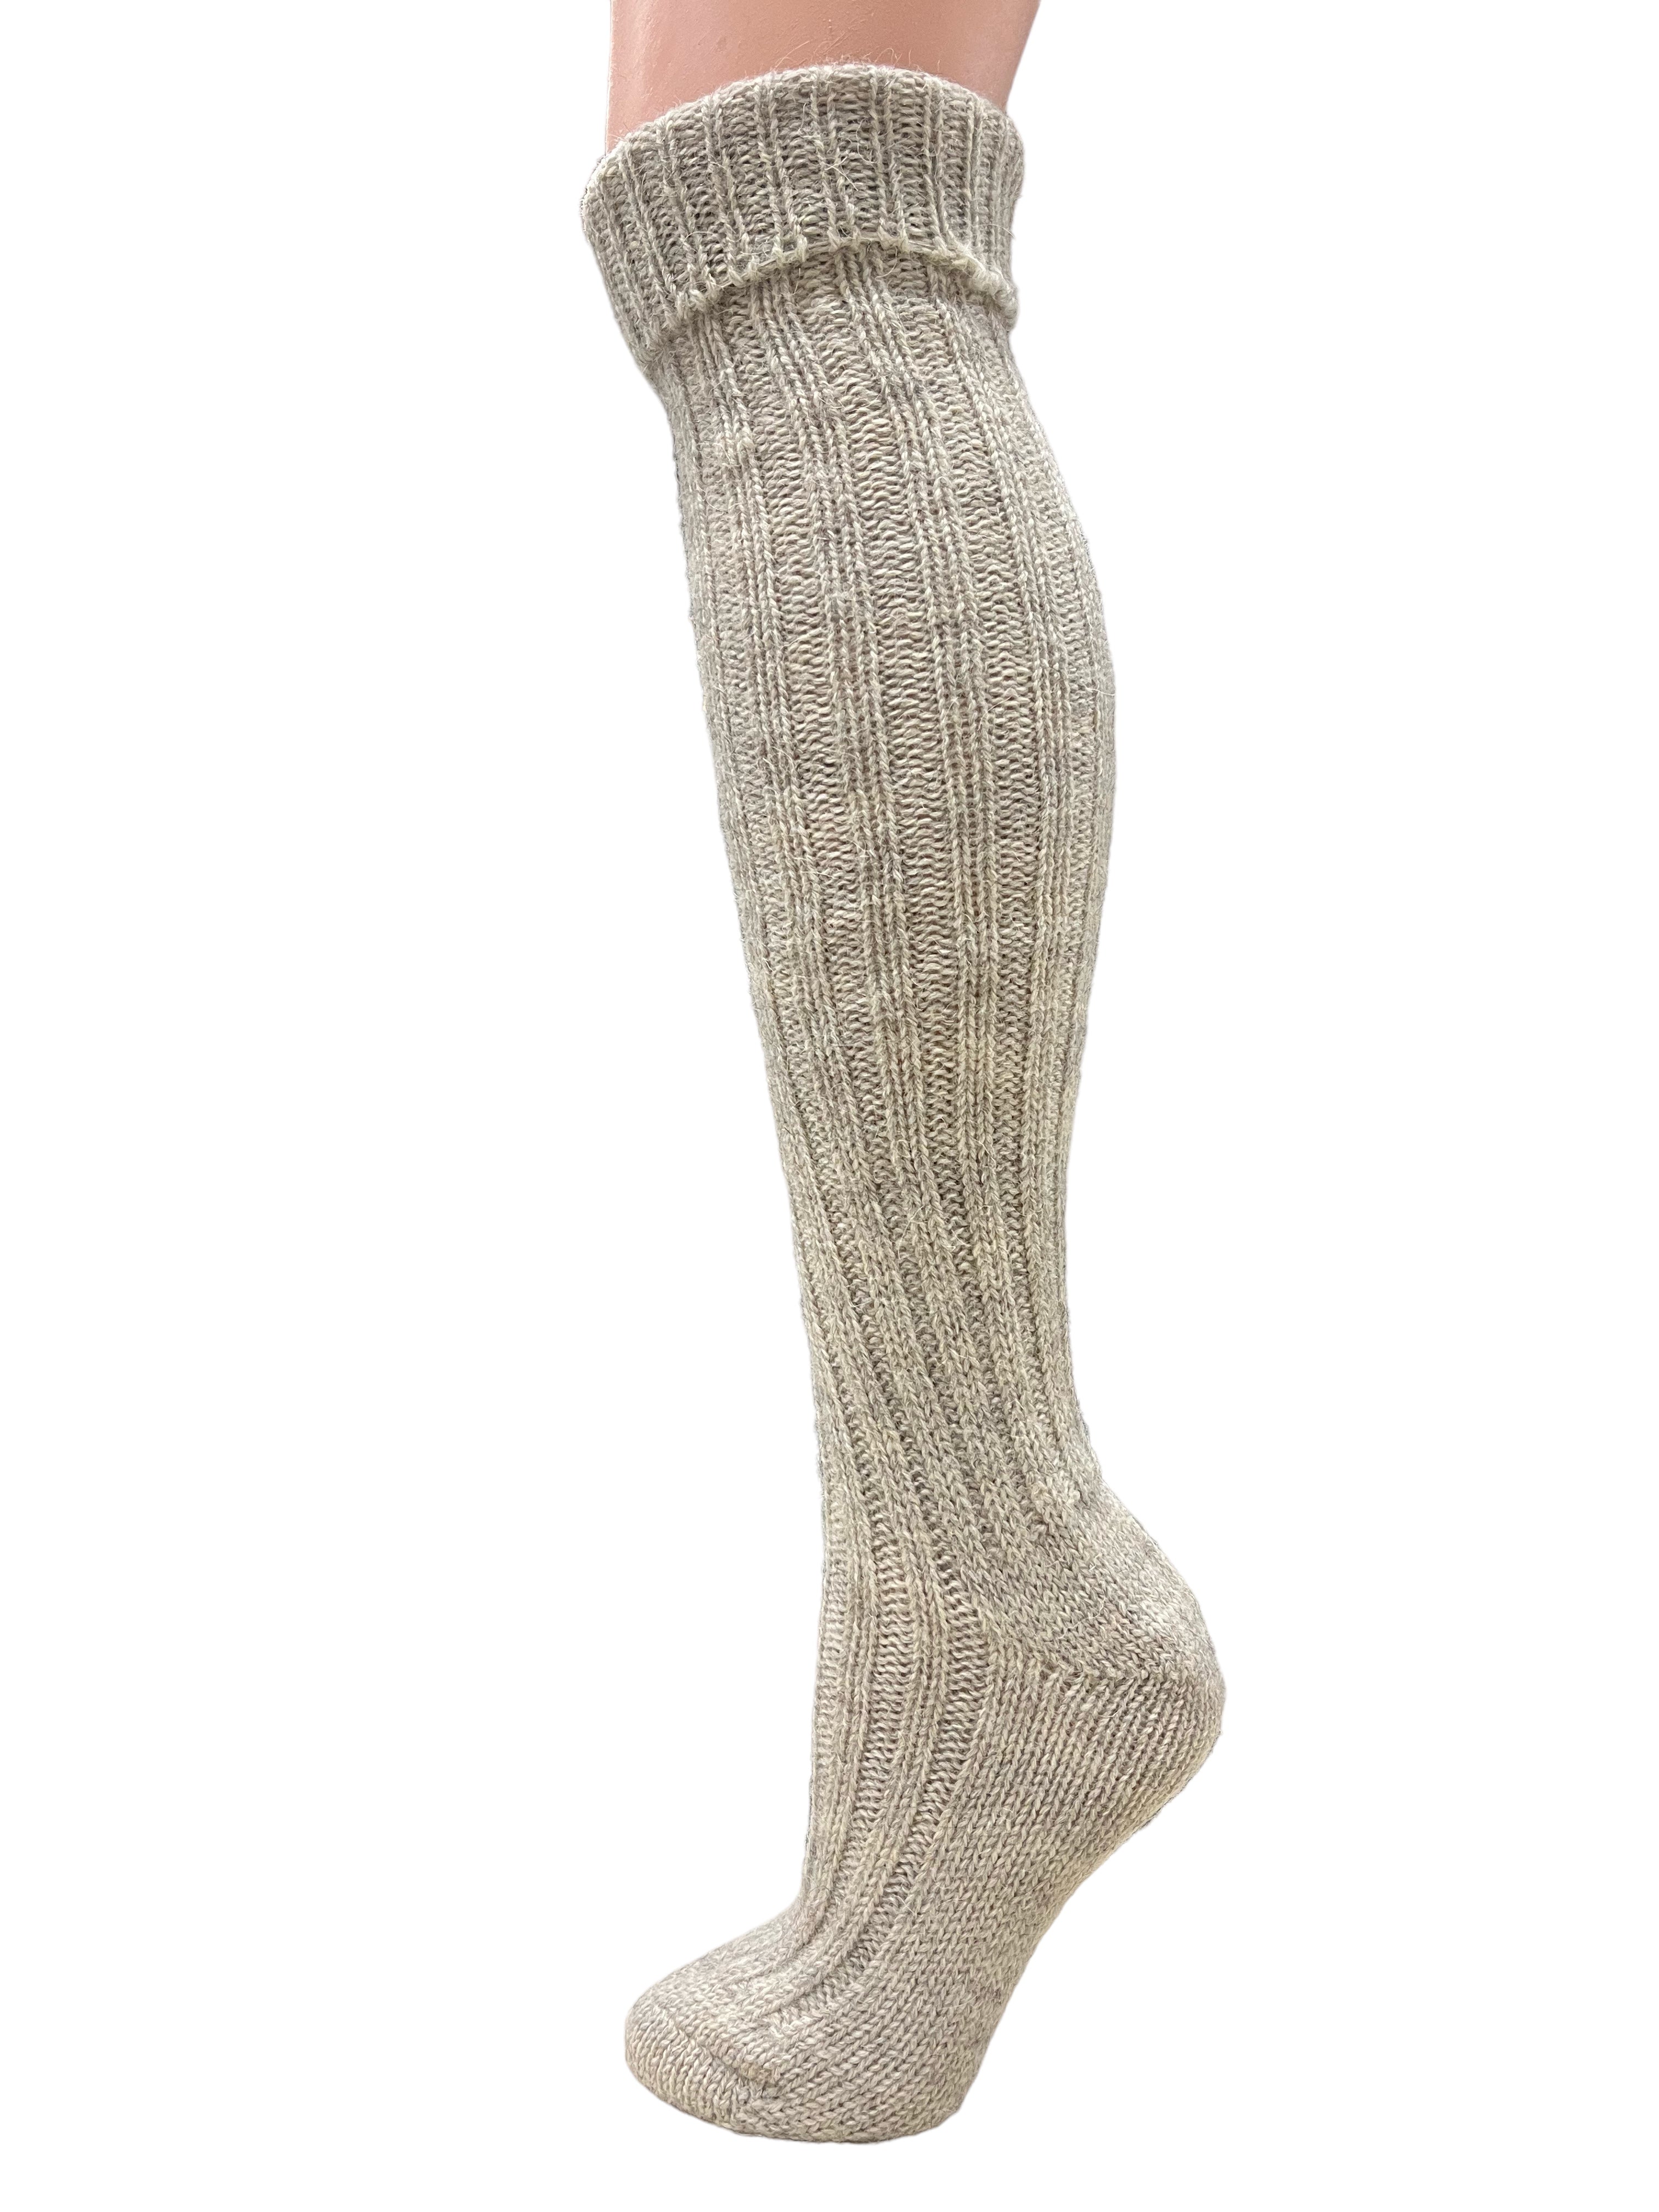 Irish Thick Wool Socks Snug Socks in 100% Pure New Wool From Irish Sheep  Hiking Socks Brown / Dark Jacob Undyed MADE IN IRELAND -  Canada